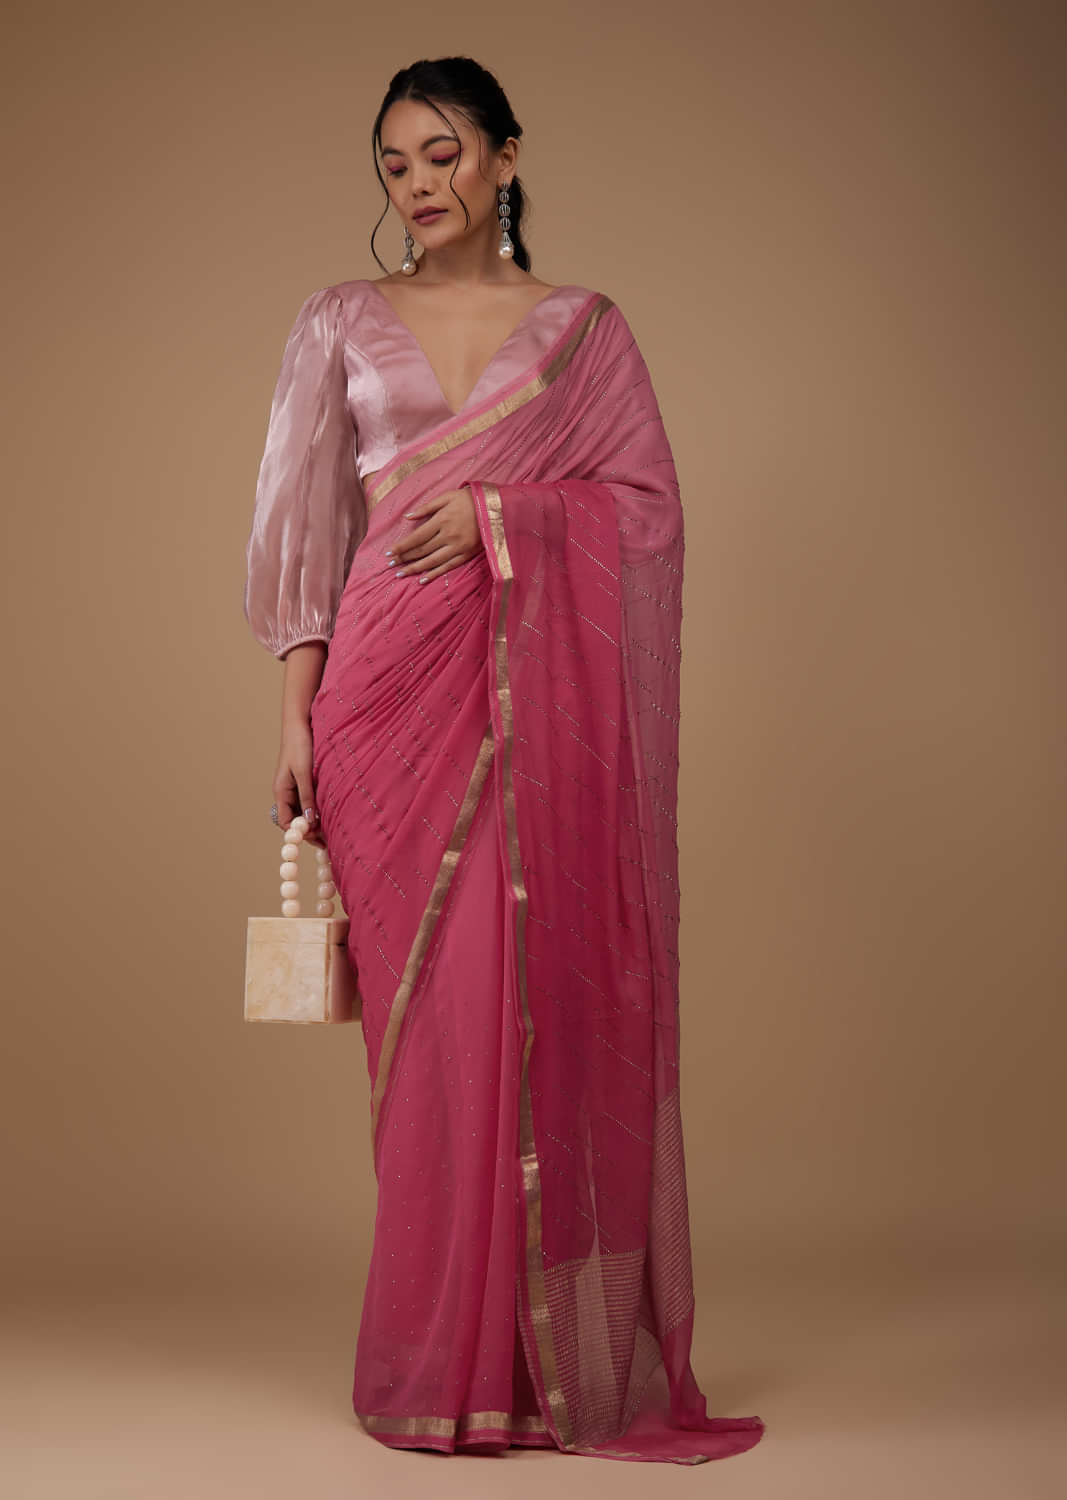 Rouge Pink Chiffon Saree With Swarovski Stone Embellishments And Zari Border